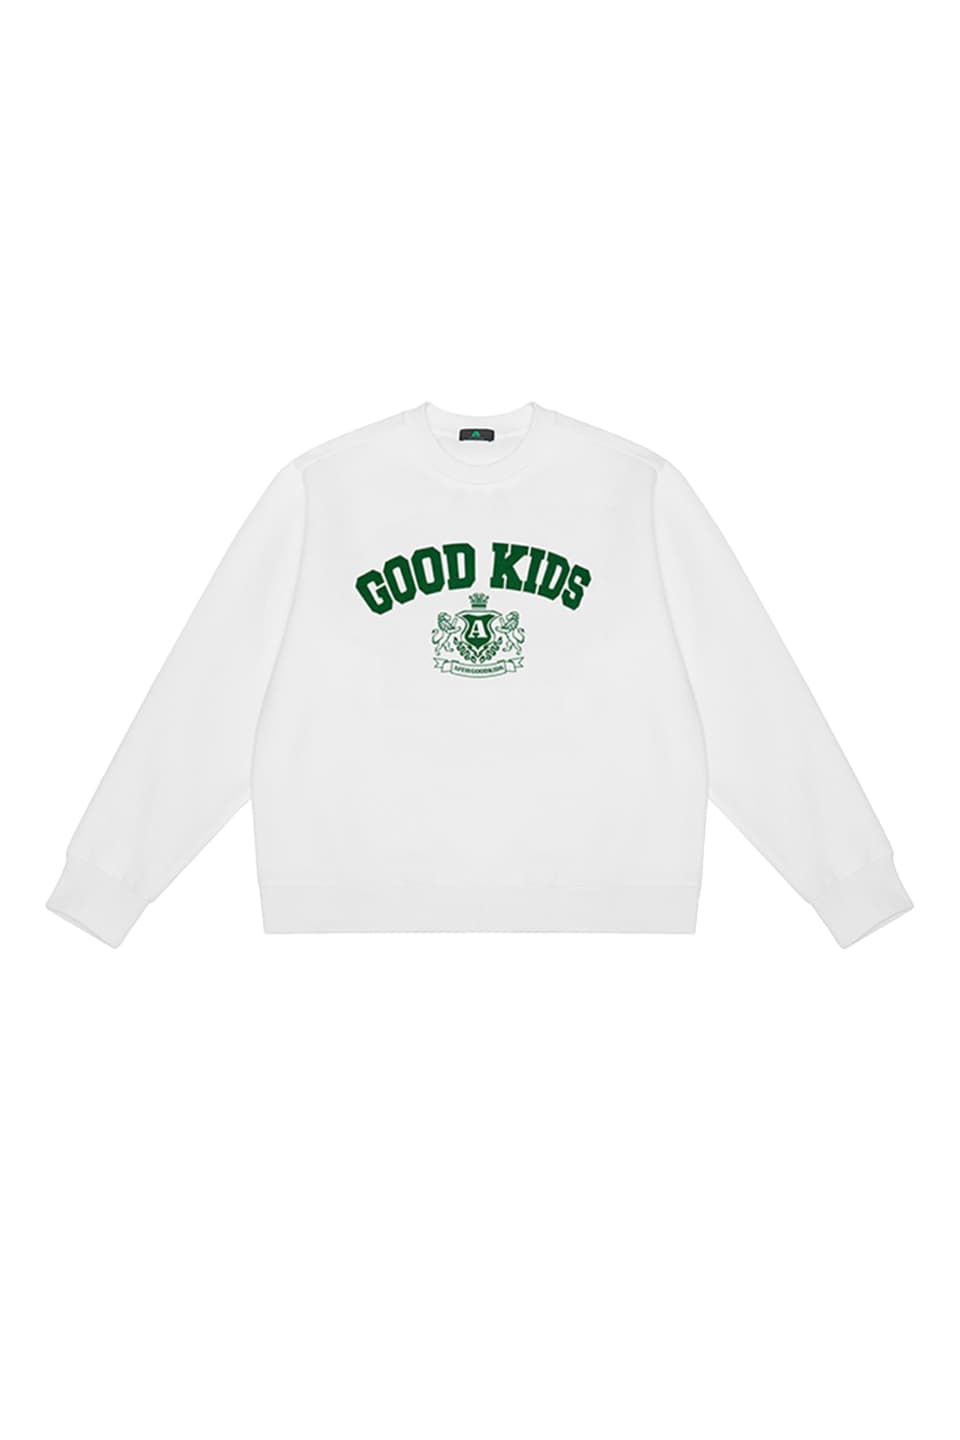 Good Kids College Sweater